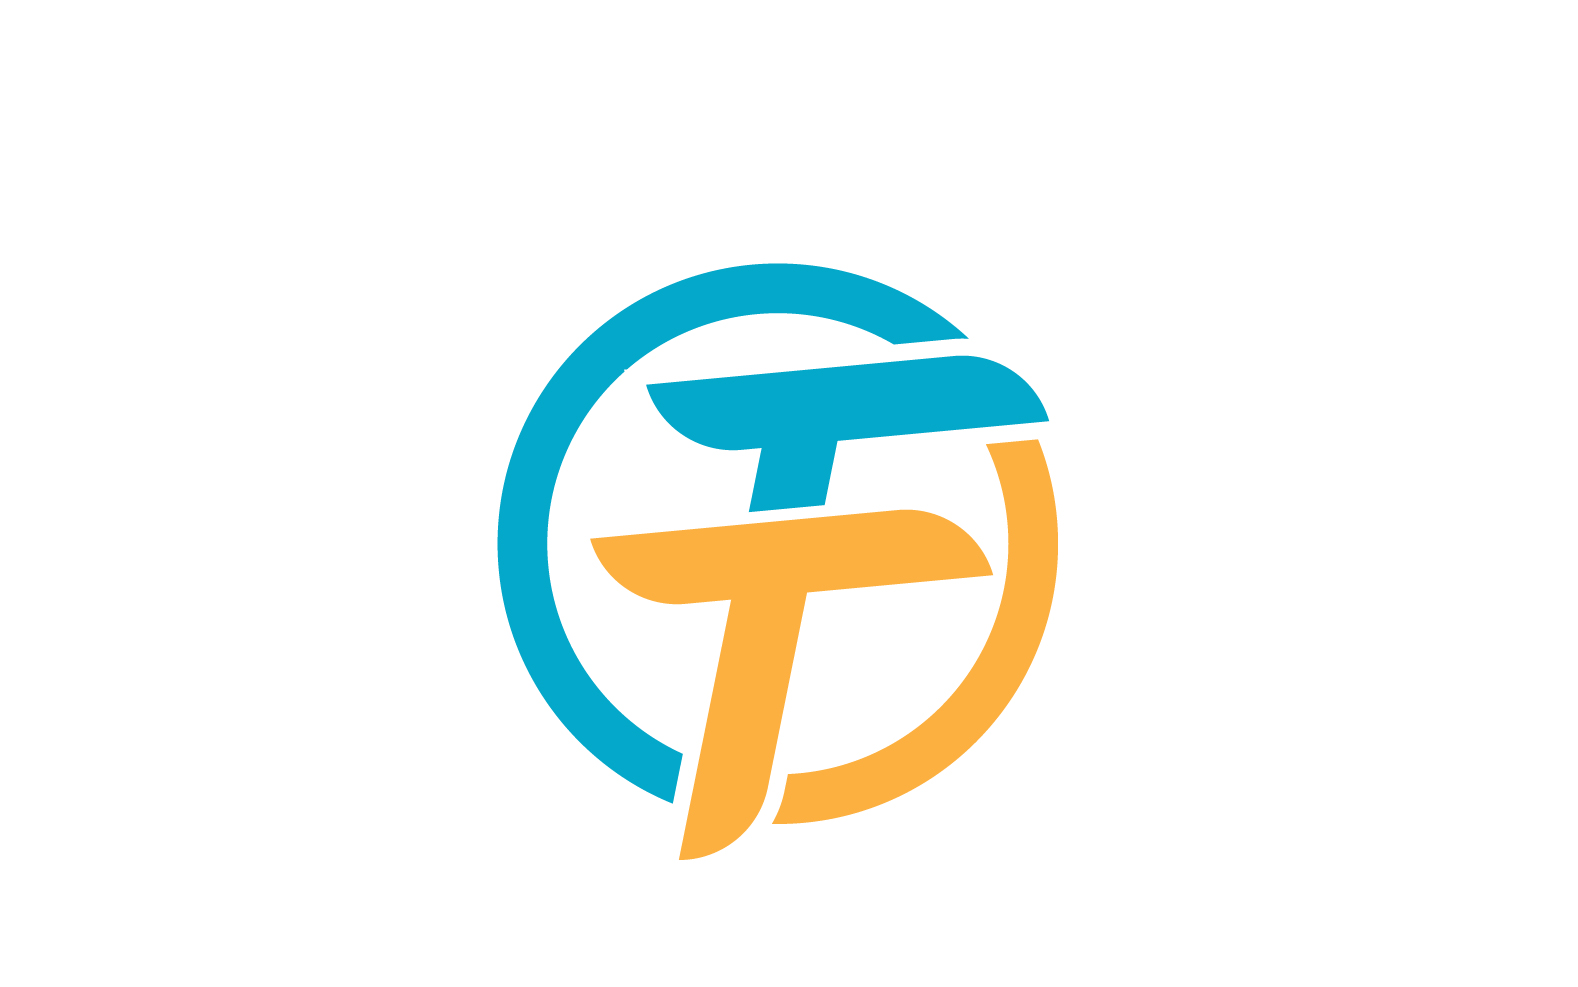 F Initial Letter Logo Icon Illustration Design Vector V2